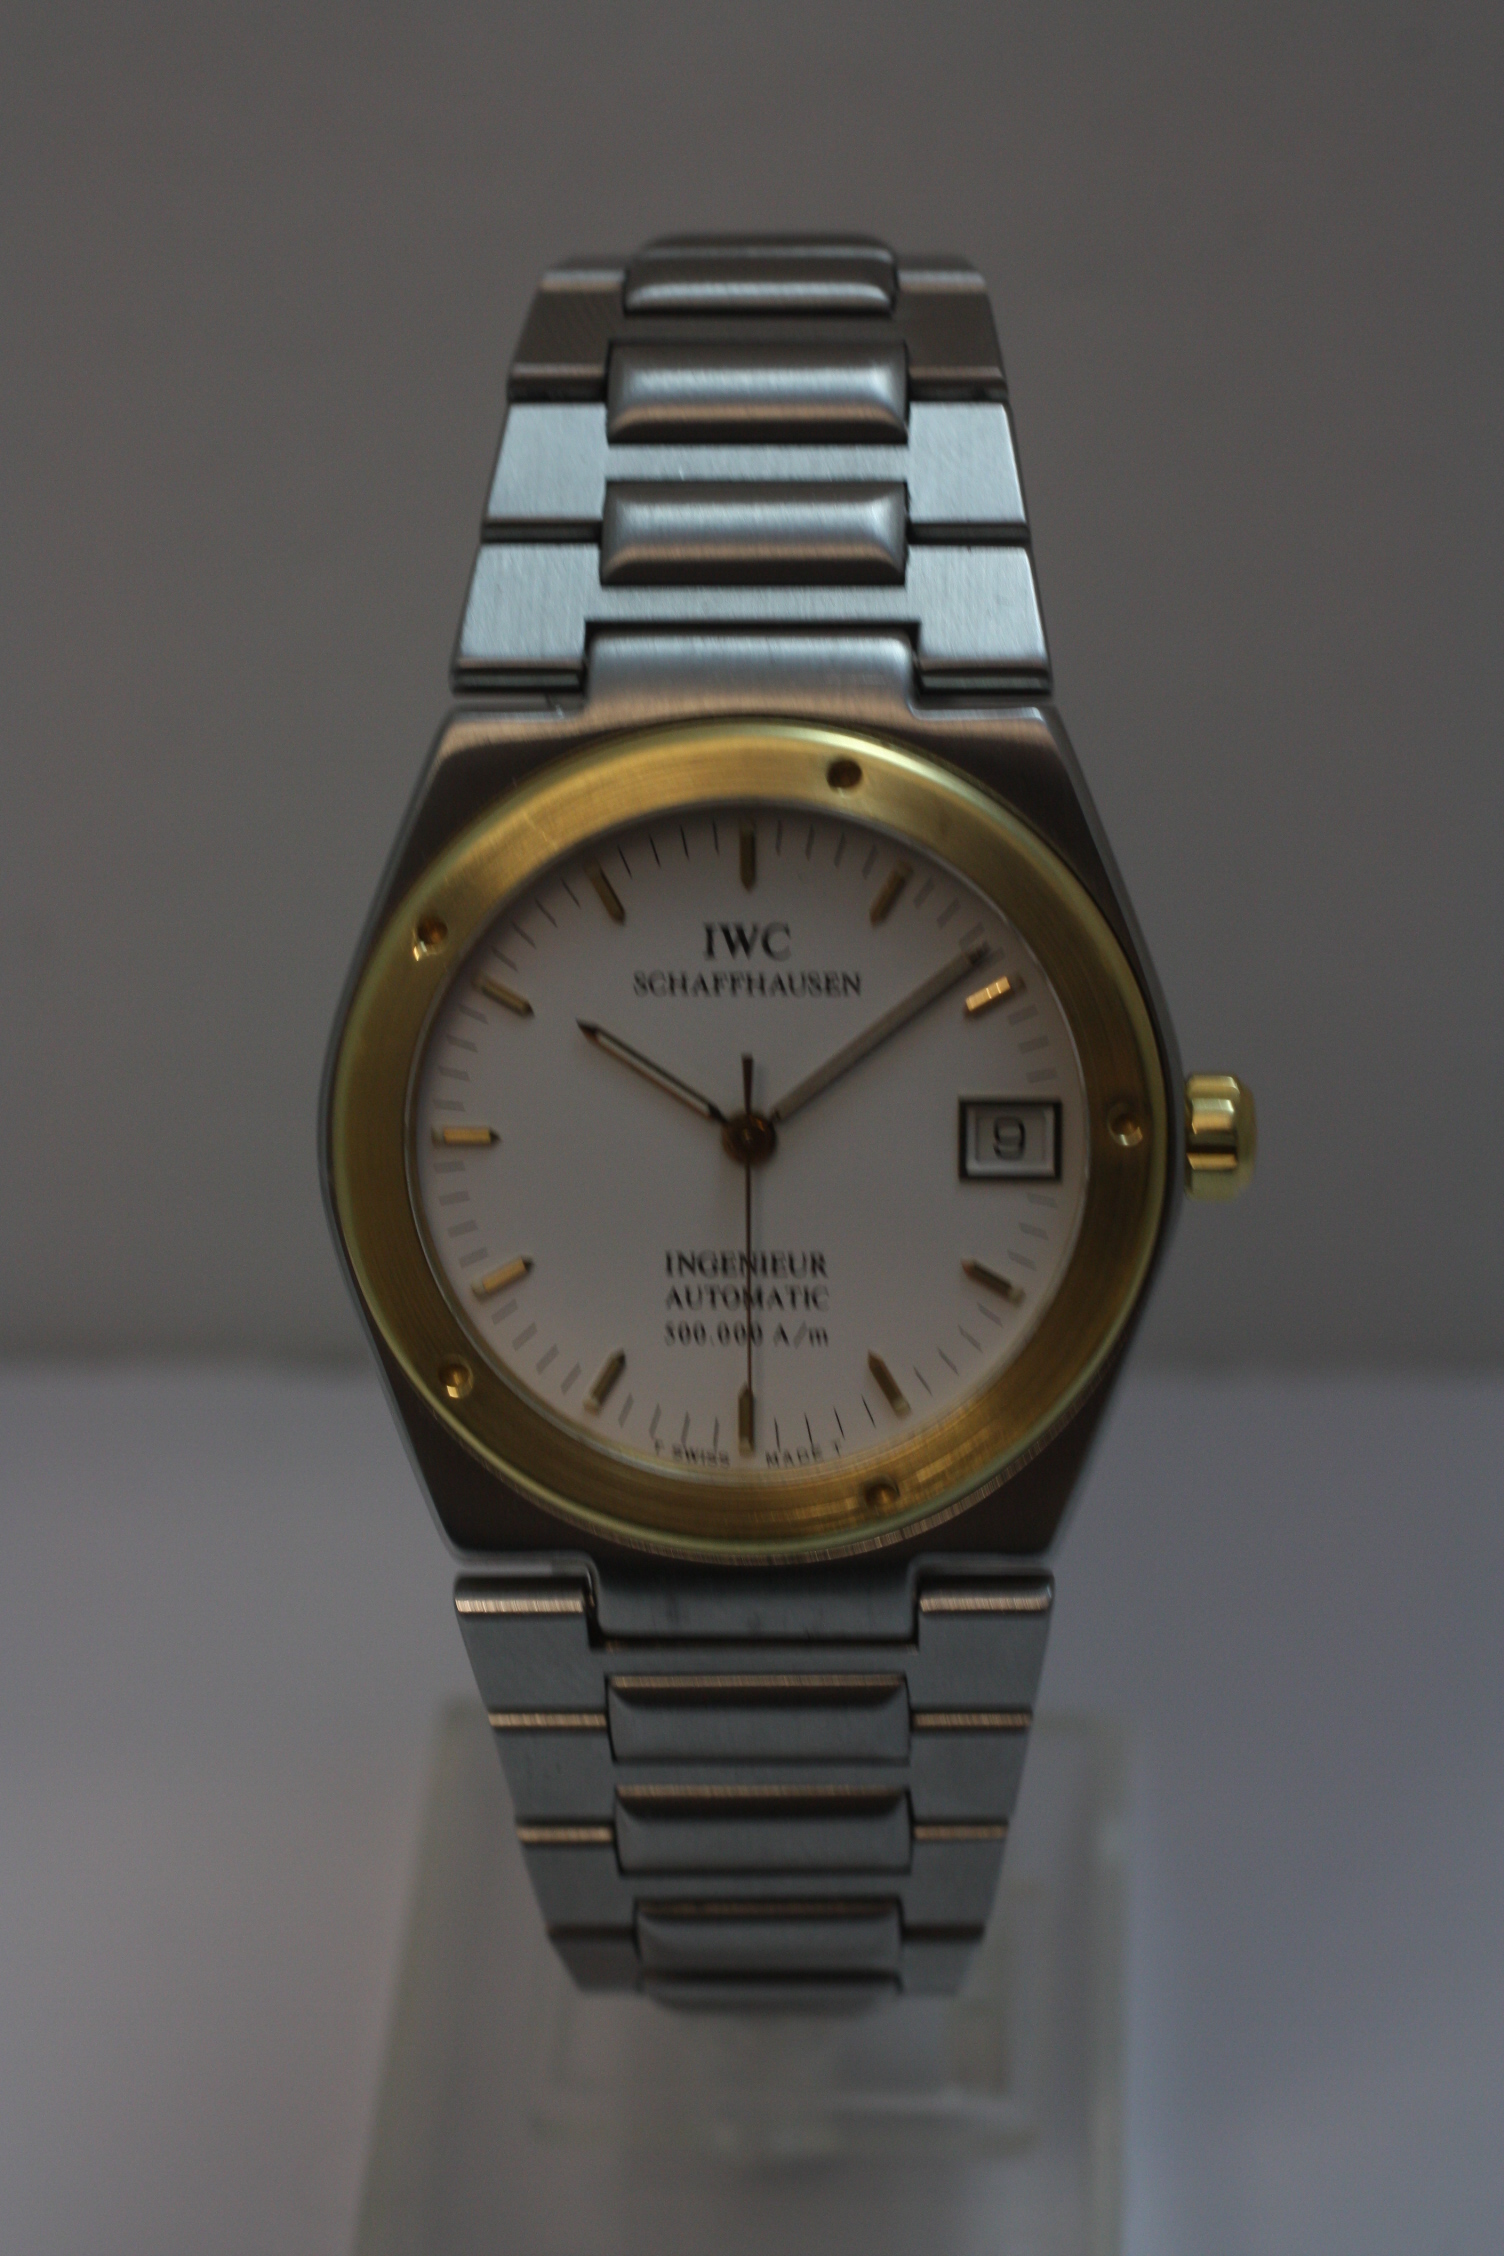 IW3508 IWC インジュニア500.000A/m の買取価格 - 高級ブランド腕時計 